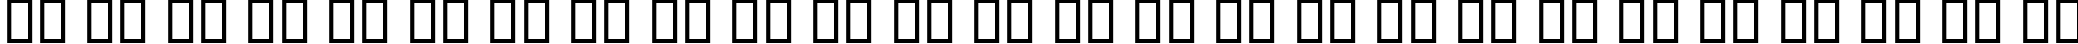 Пример написания английского алфавита шрифтом B Shiraz